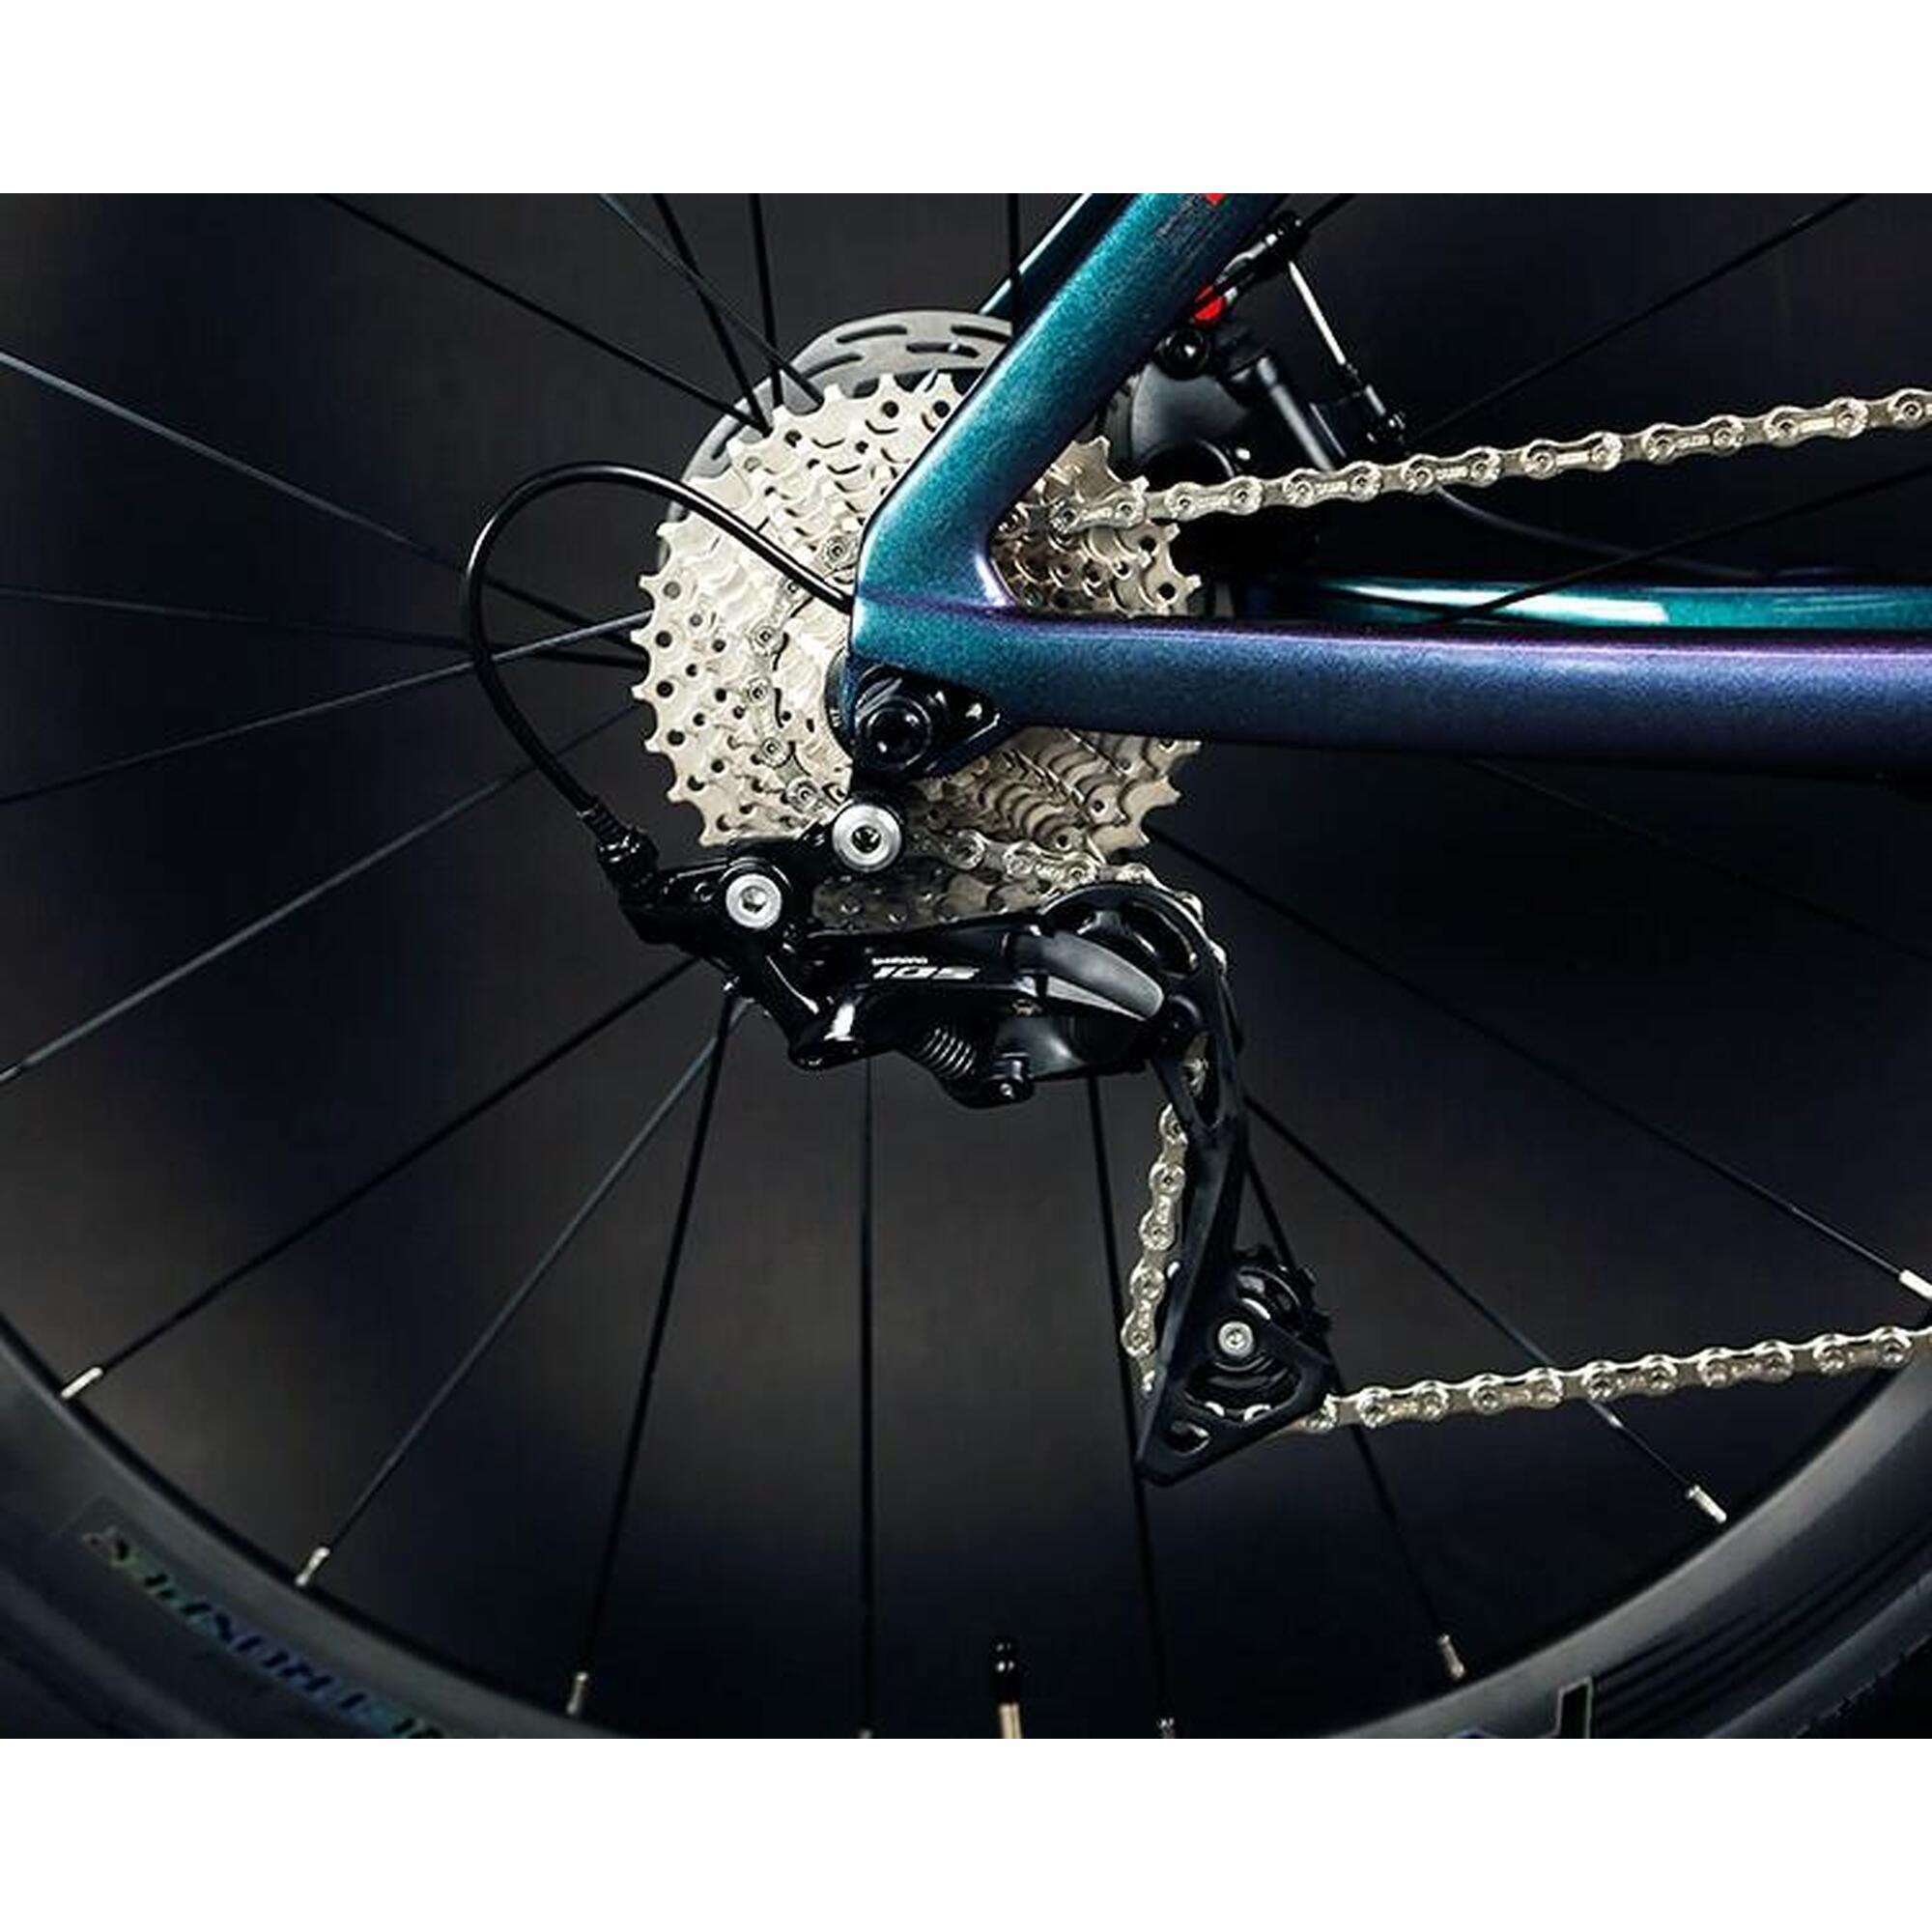 AURORA-Disc Carbon Fiber Rival-22s Road Bike - Cement Grey